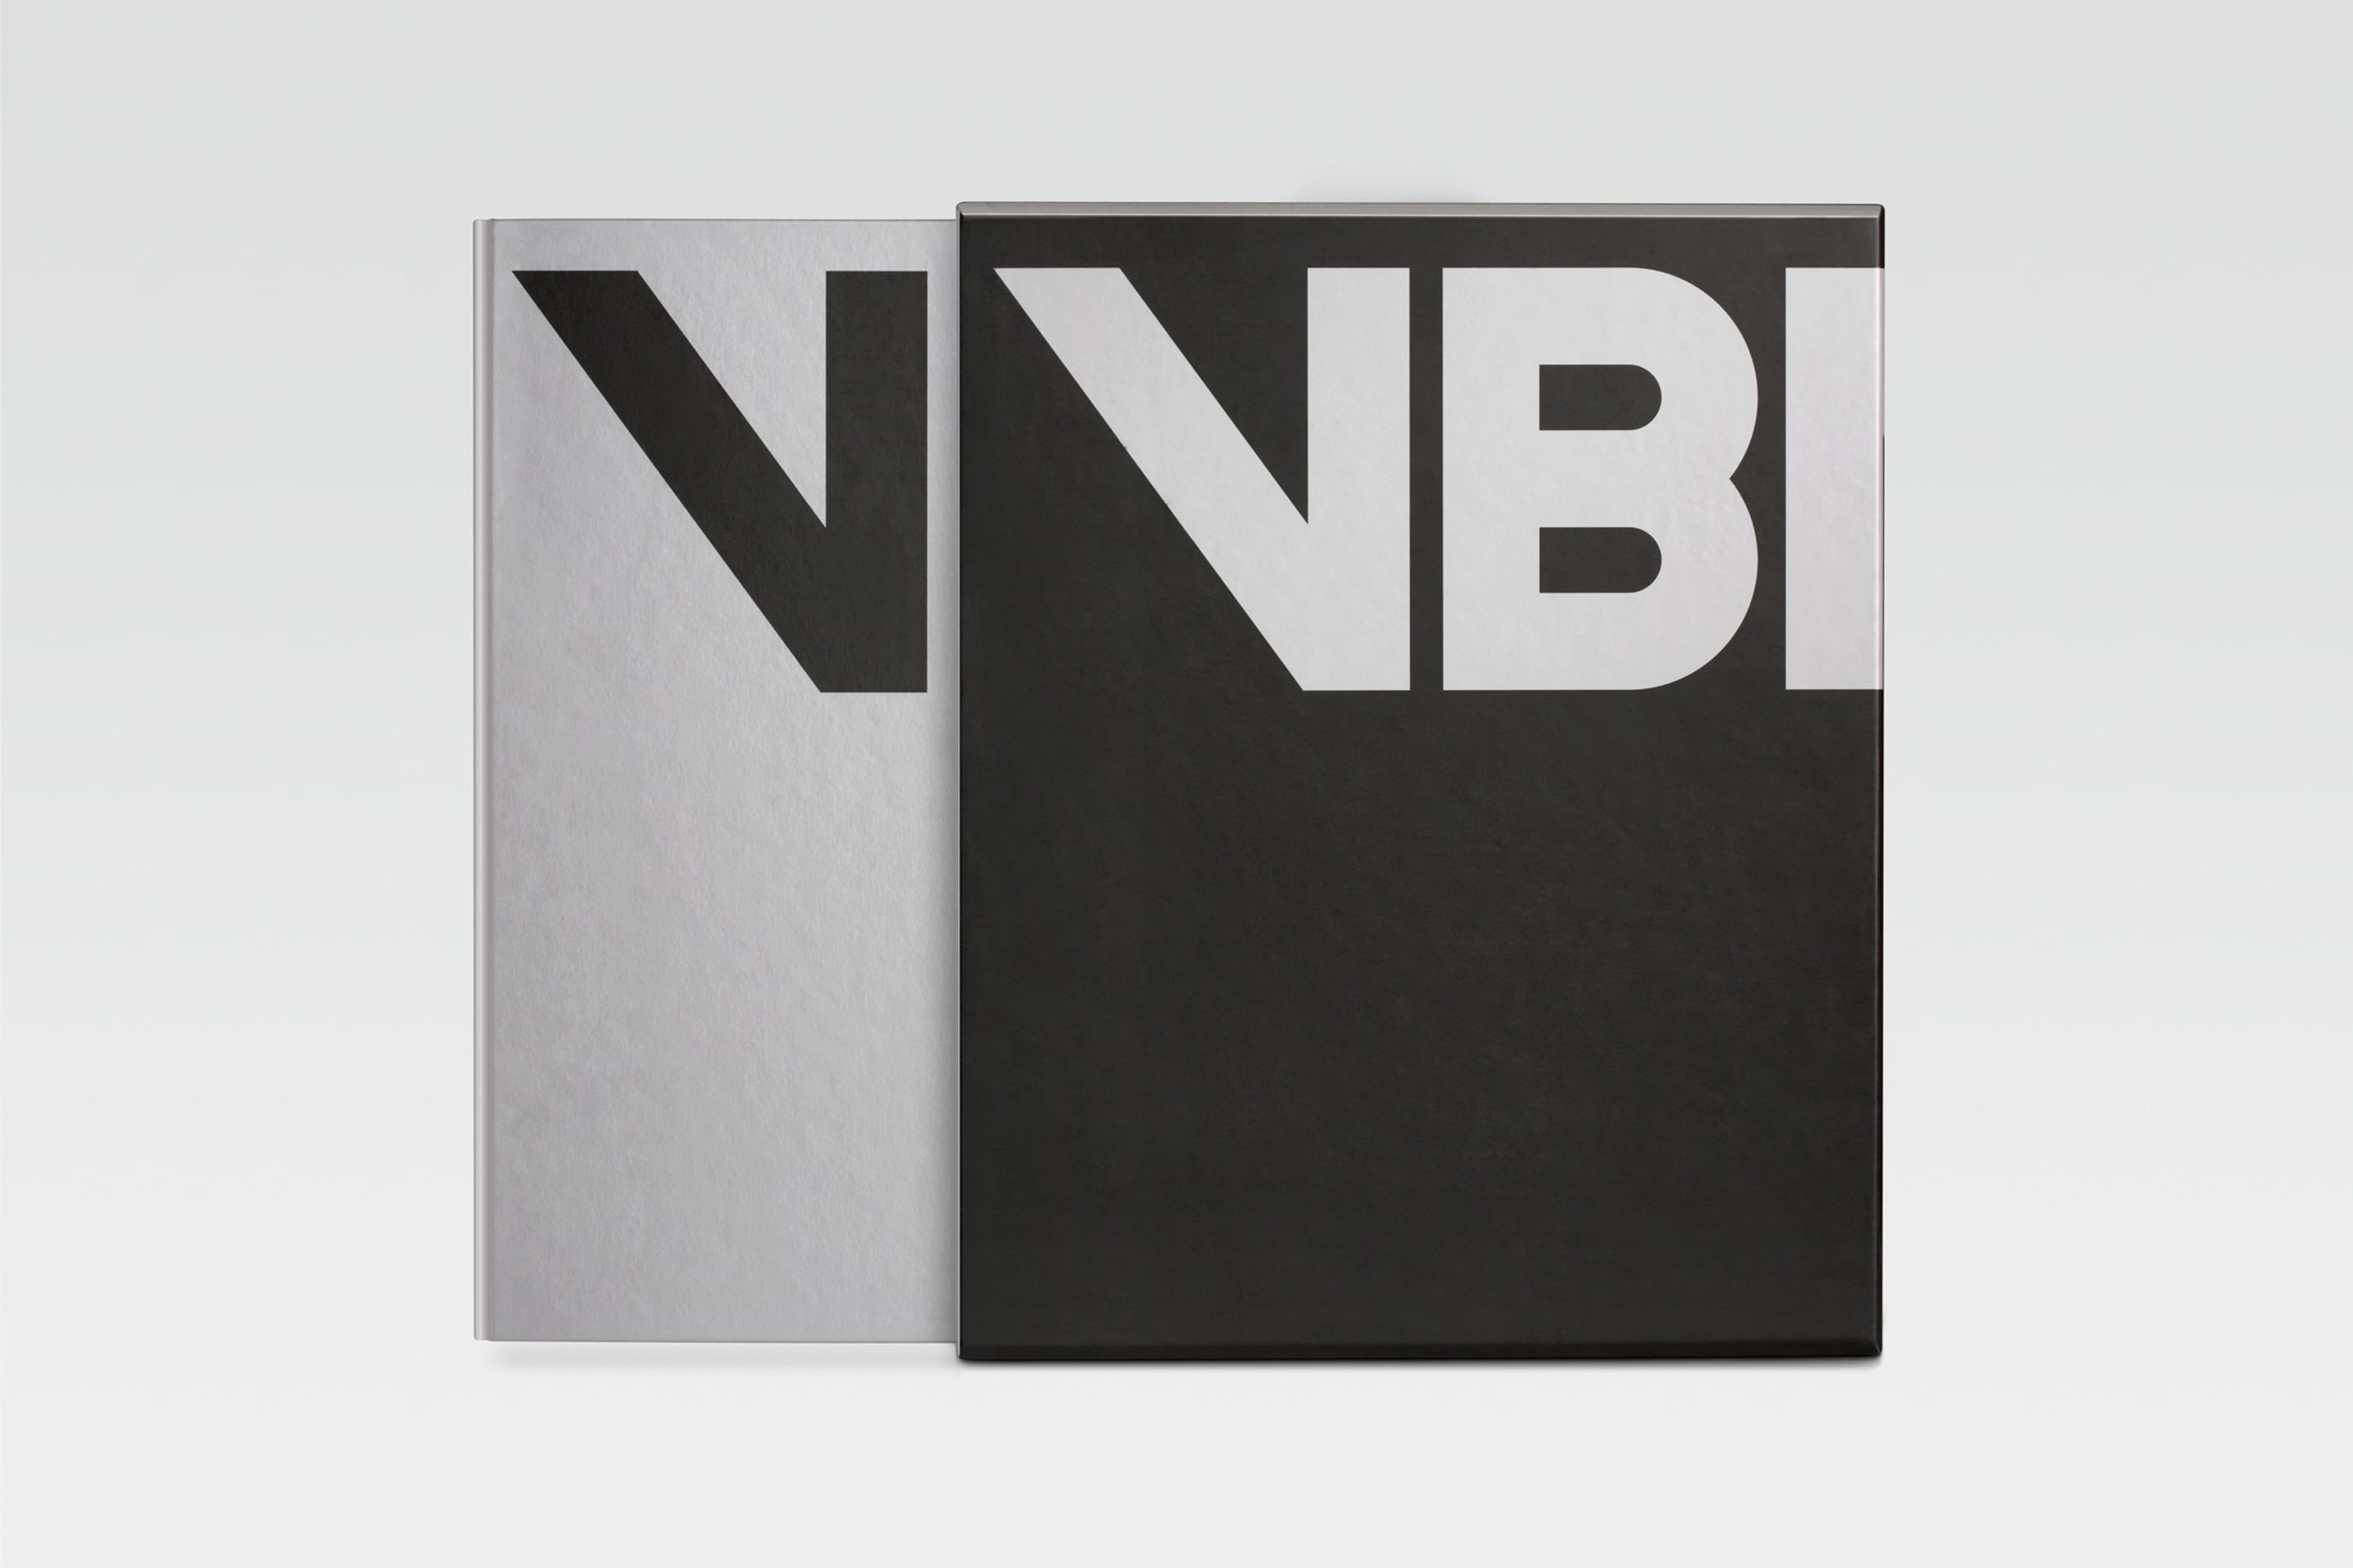 studio dumbar design visual brand identity for VBMS expert in offshore installations bid book design